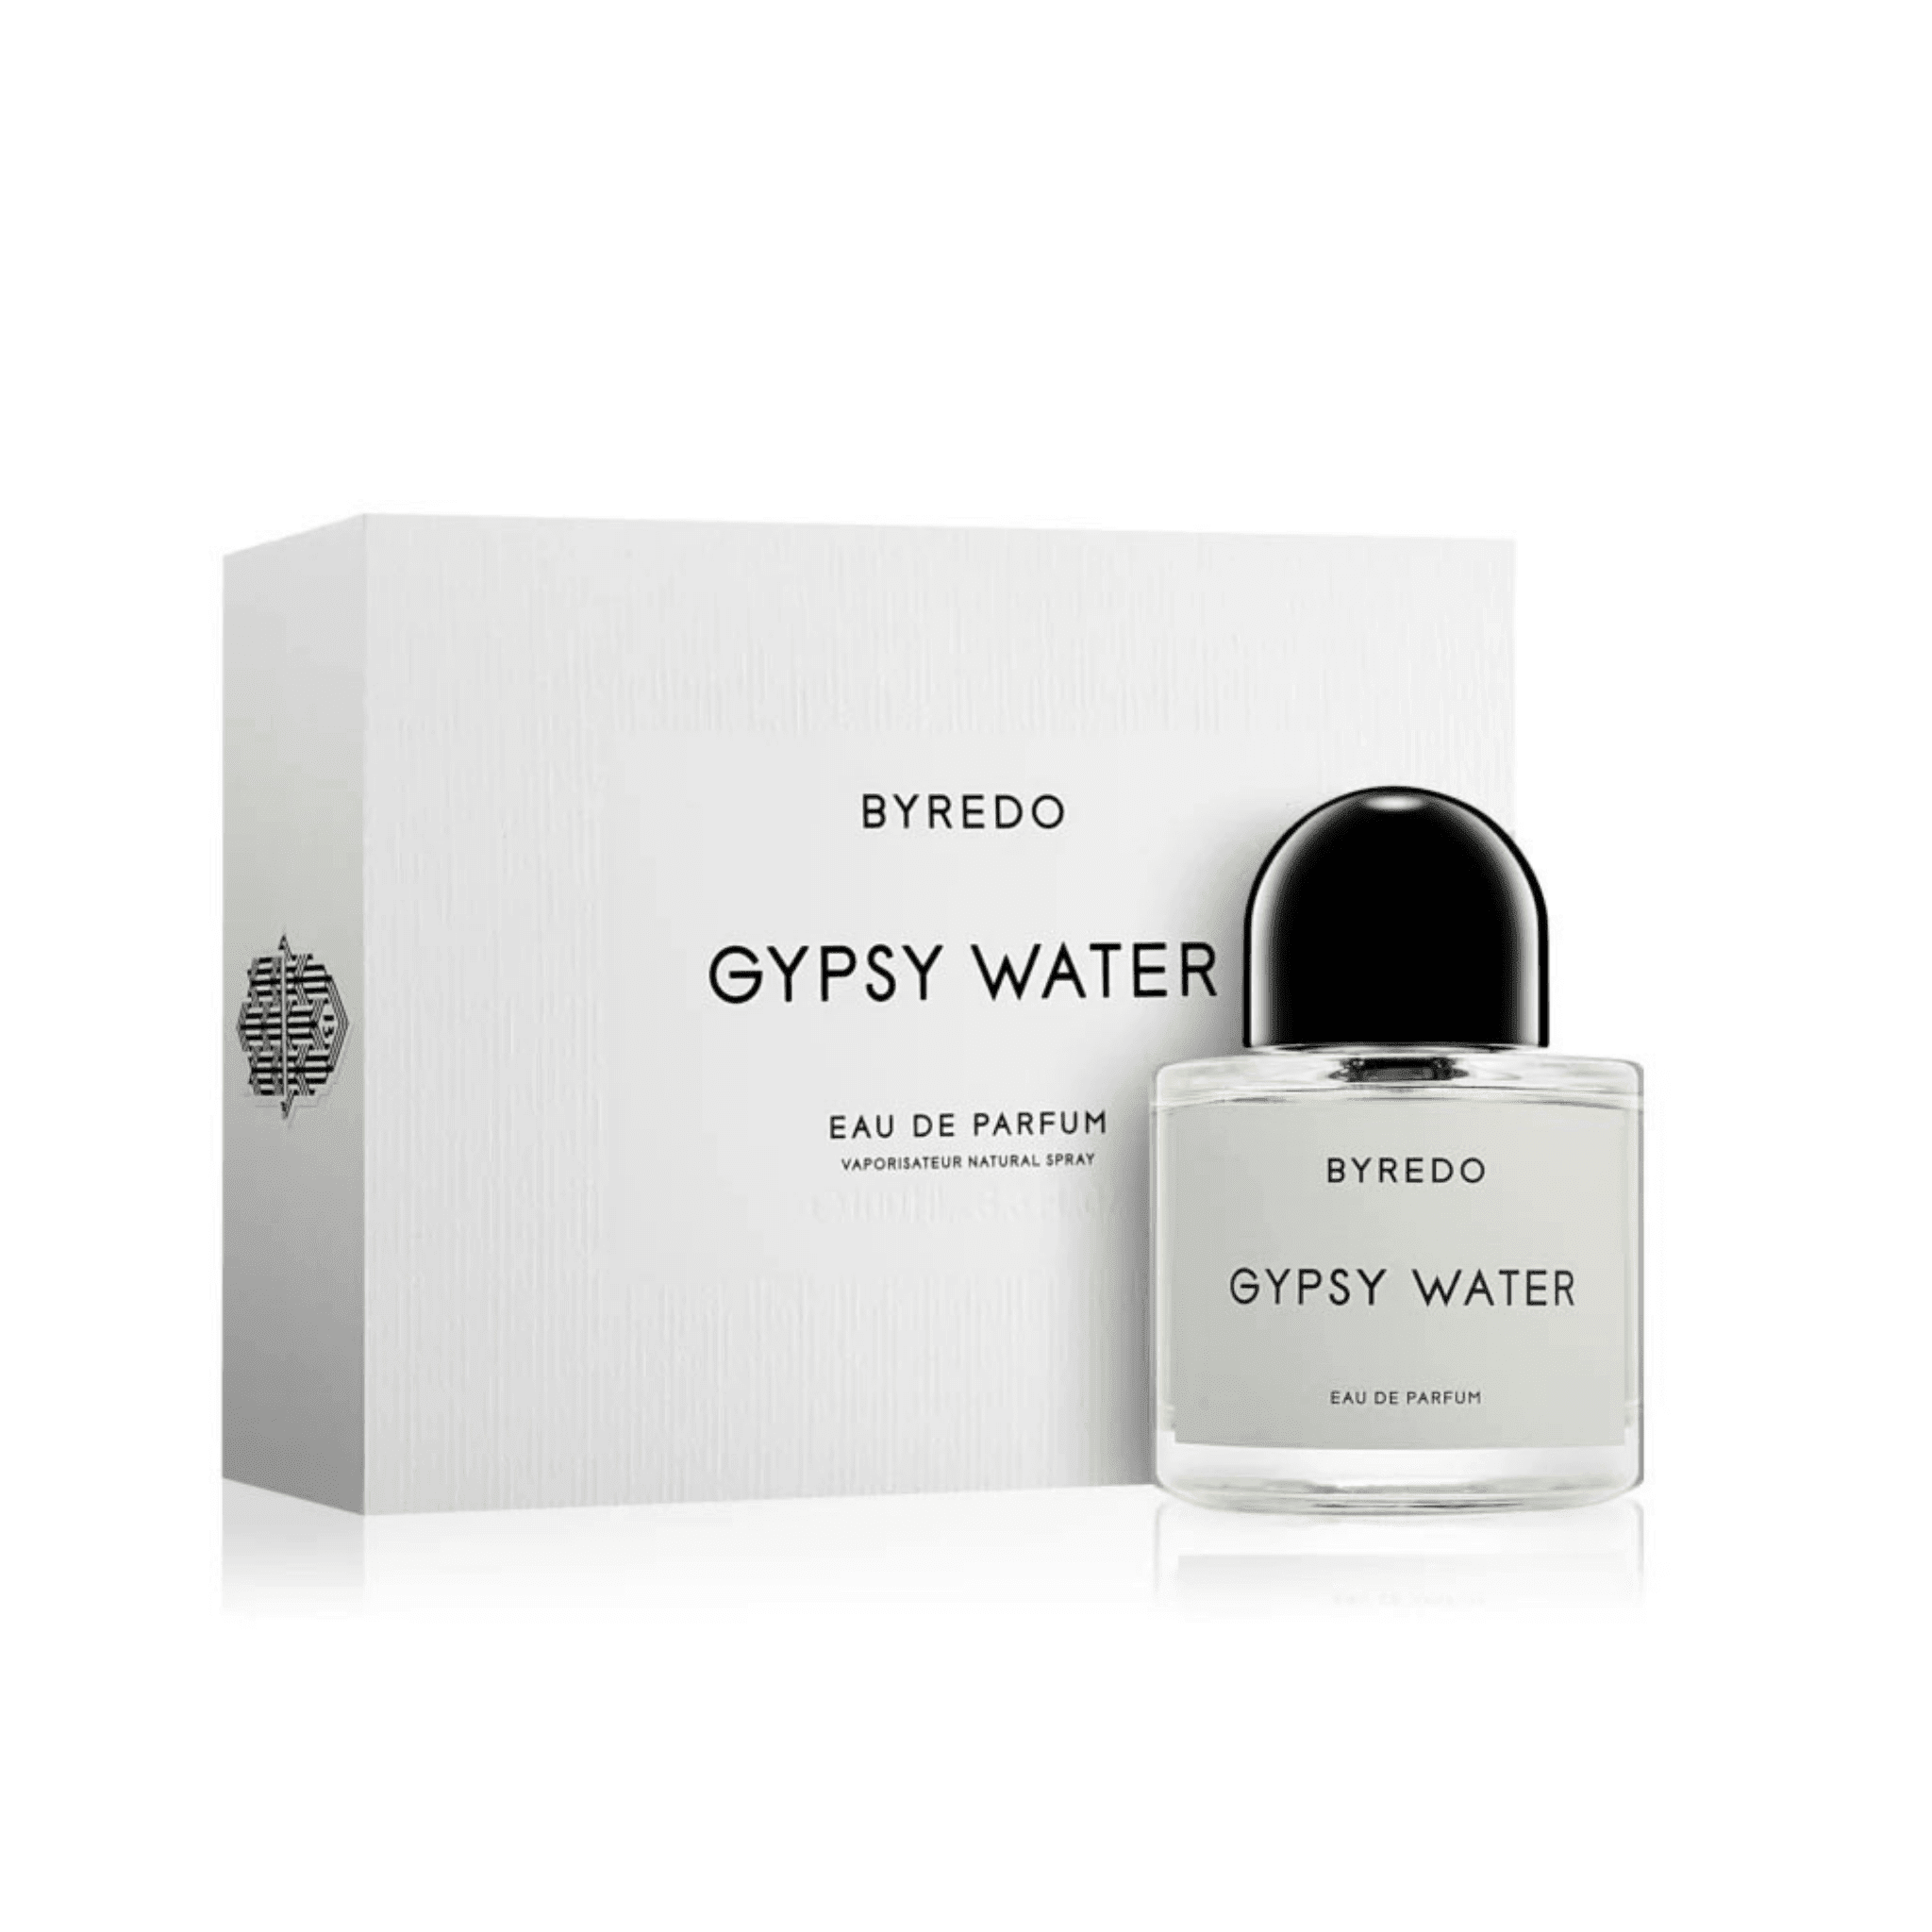 Gypsy Water perfume